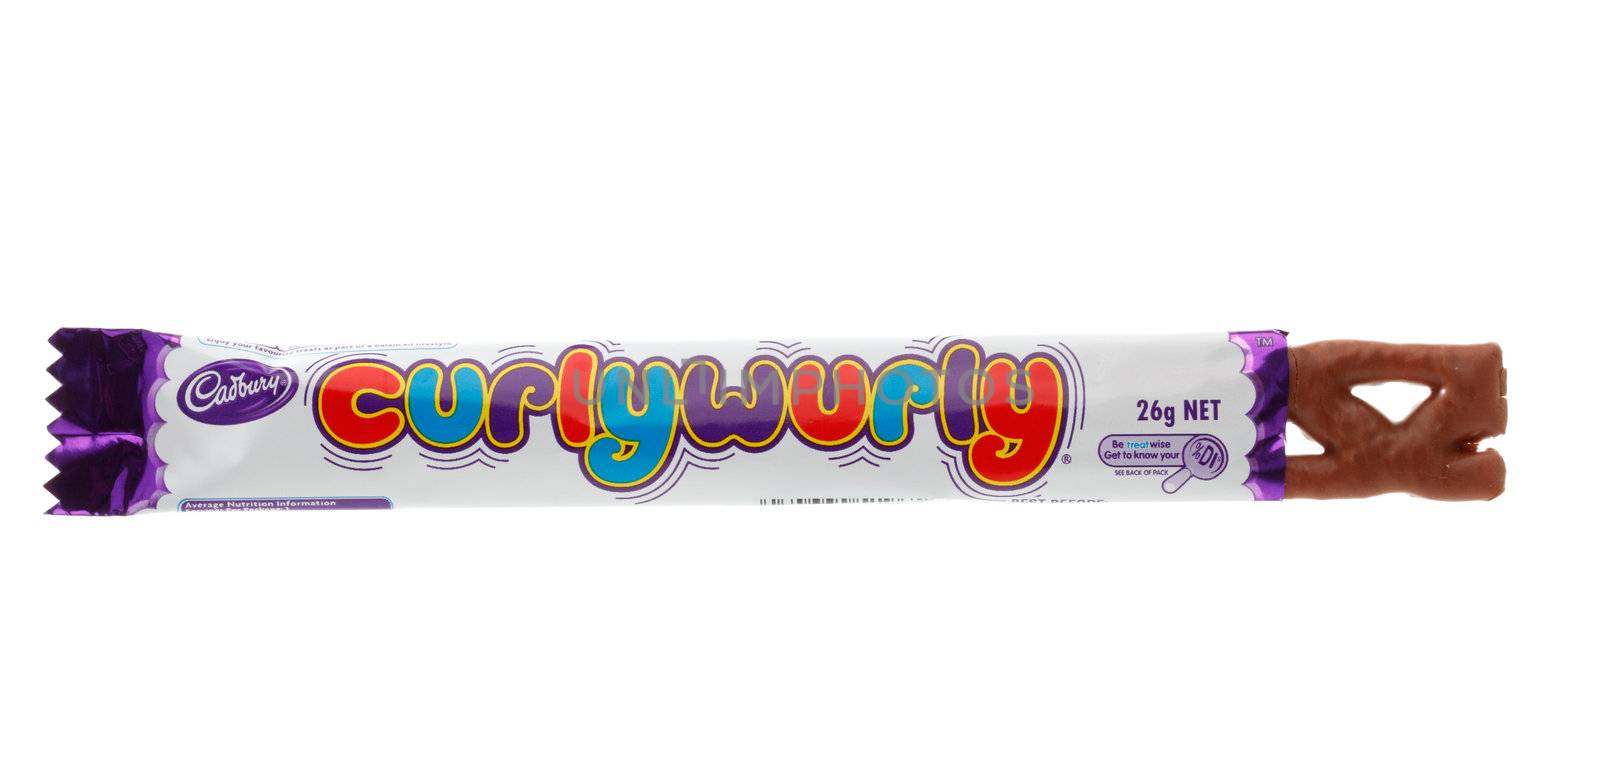 Cadbury Curly Wurly by lovleah